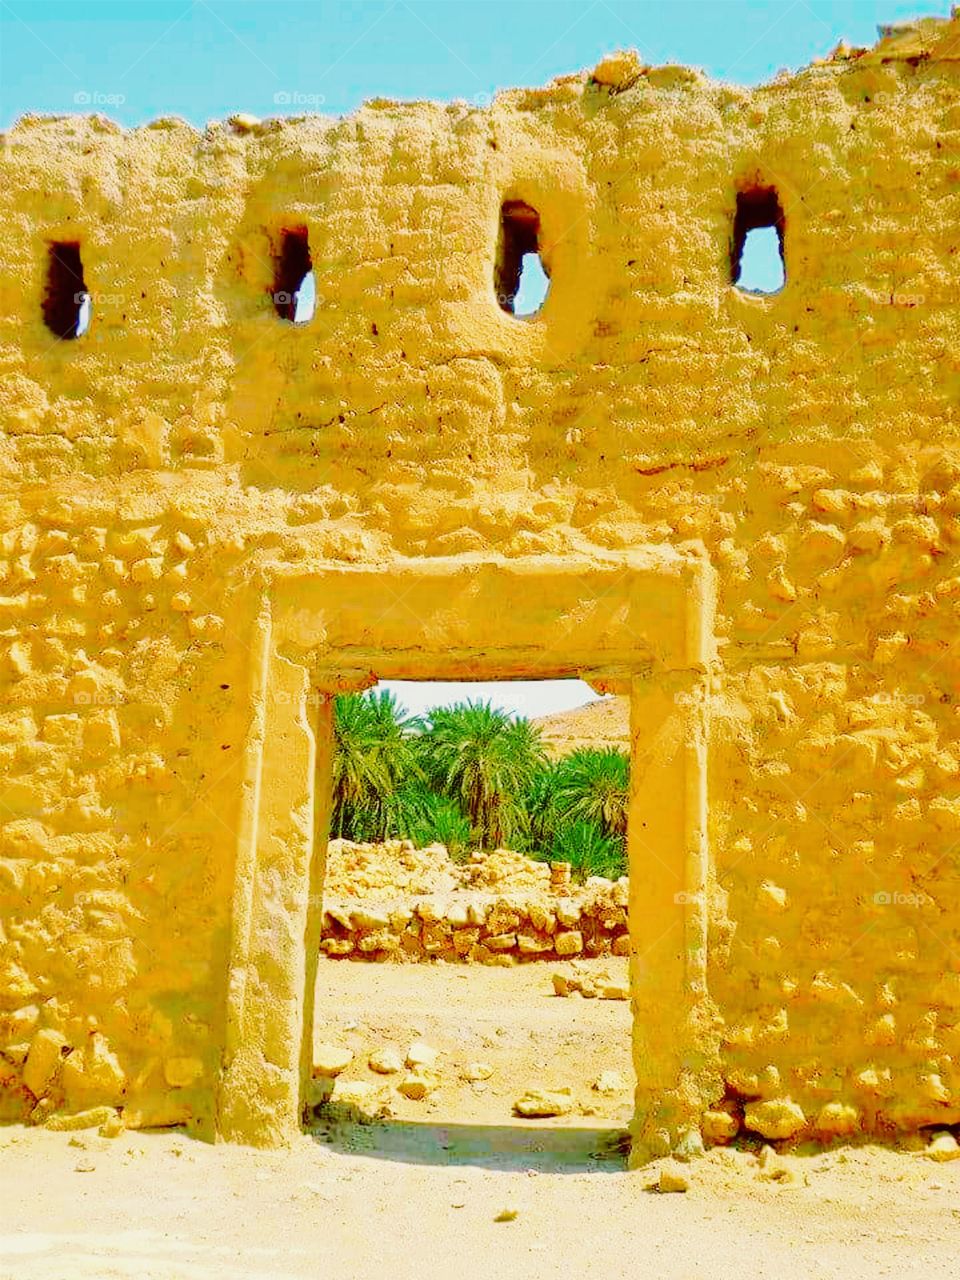 View Through an Ancient Stone Doorway to a Desert Oasis. Location: northern edge of the Sahara desert, Tunisia